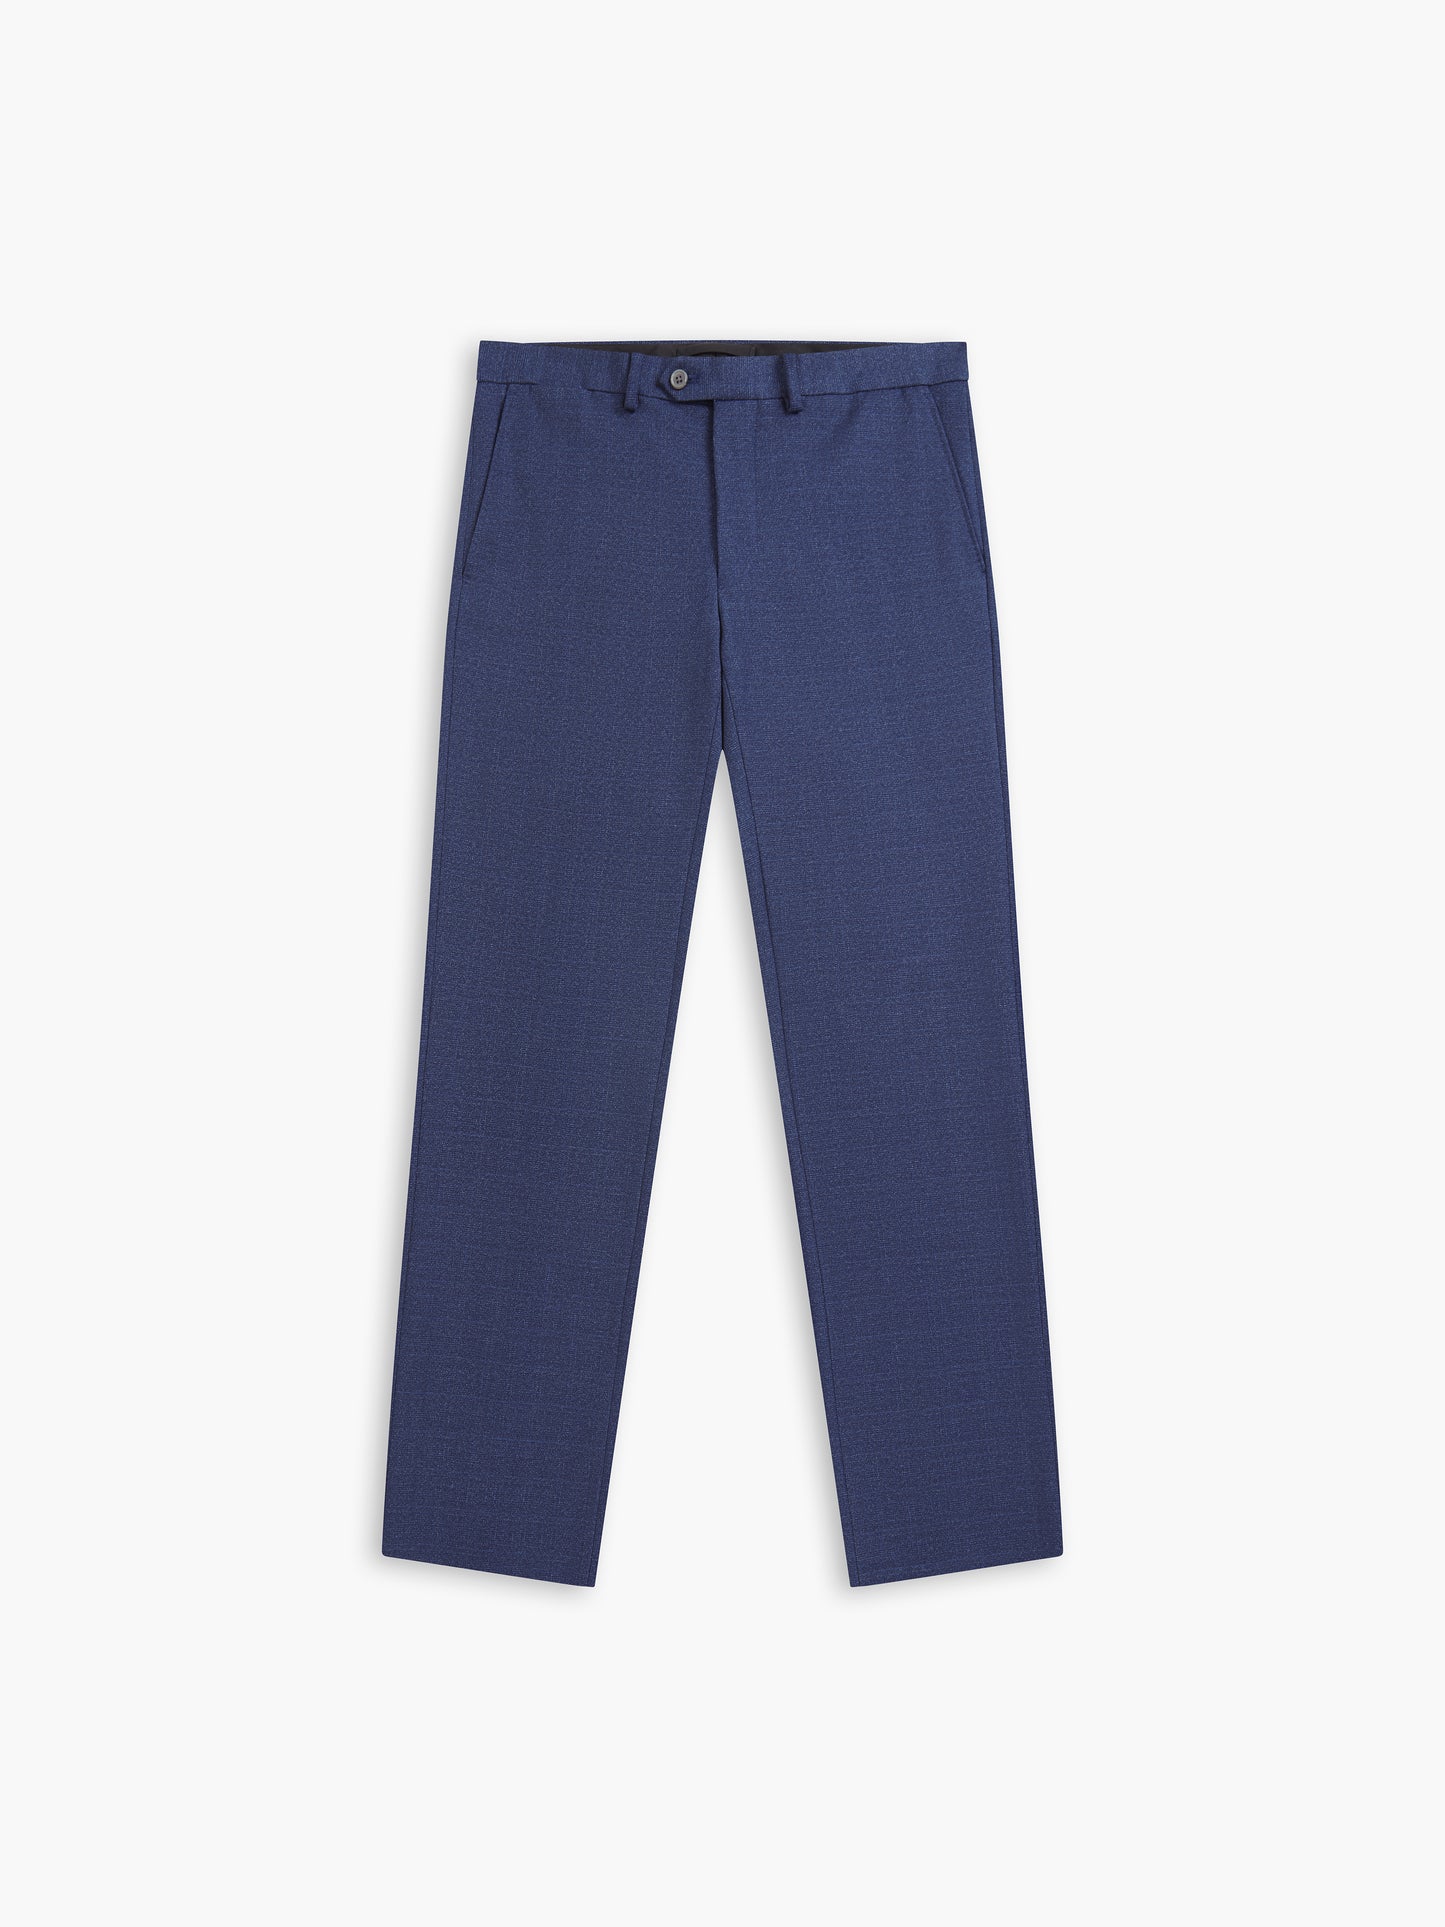 Oasis Navy Blue Semi Plain Trousers